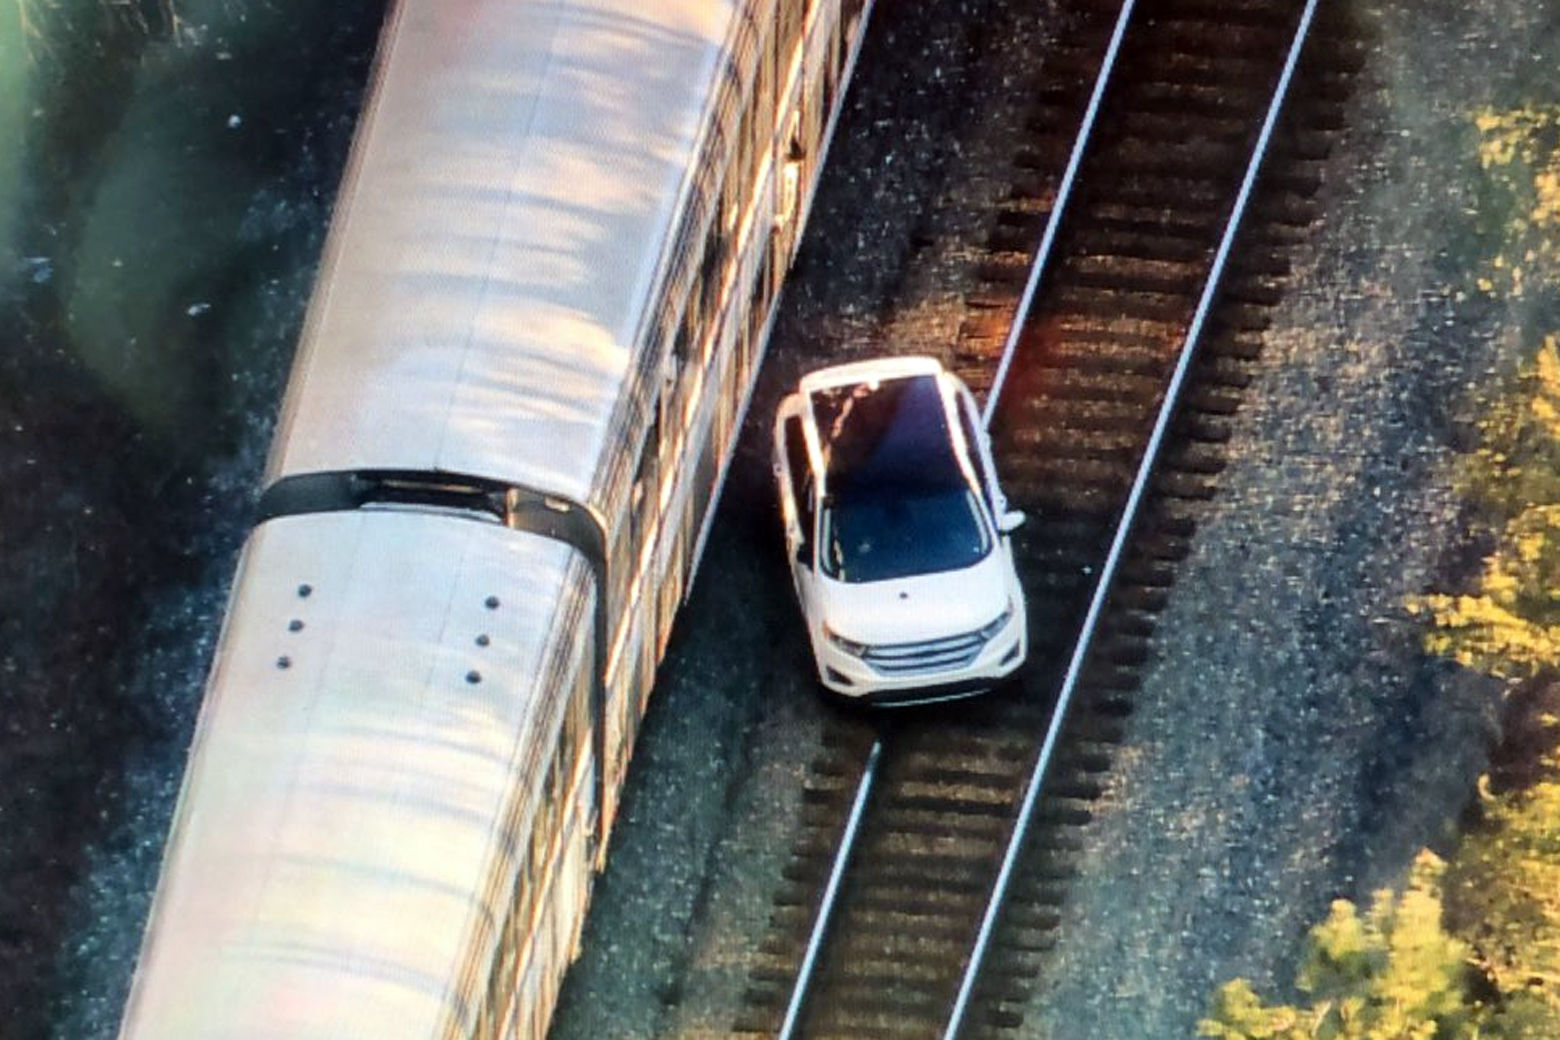 An Amtrak Auto Train struck a car on the tracks Tuesday morning near Lorton, Virginia. (NBC Washington/Brad Freitas)